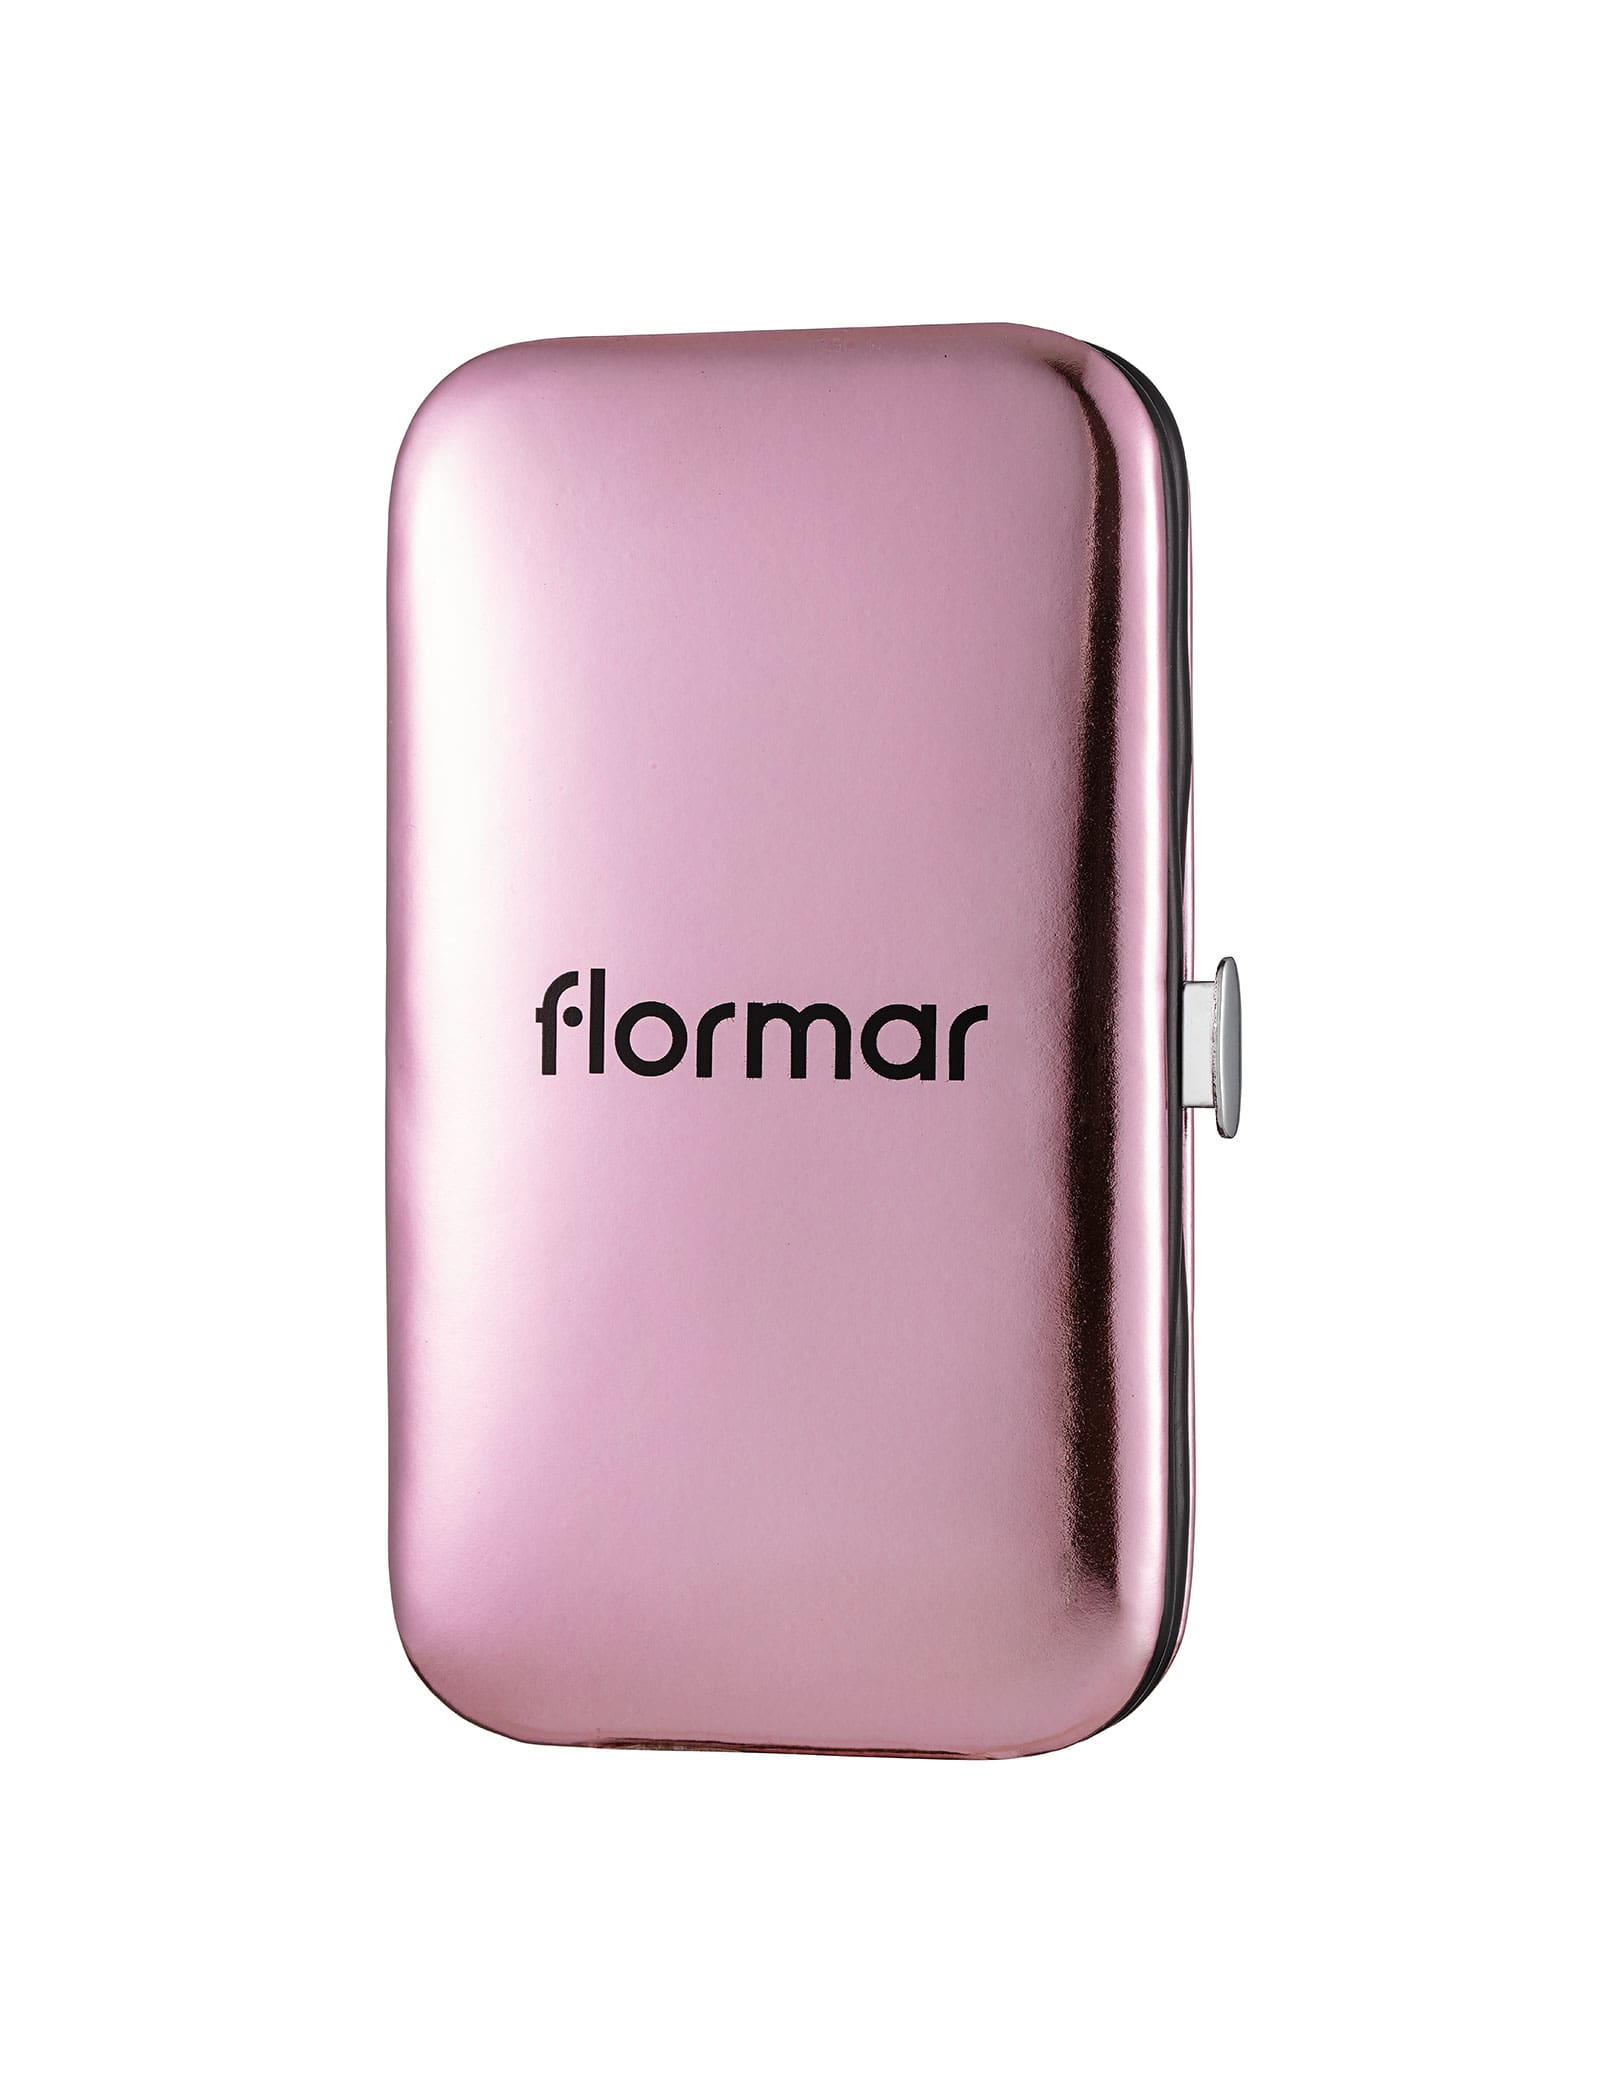 Flormar Manicure Set